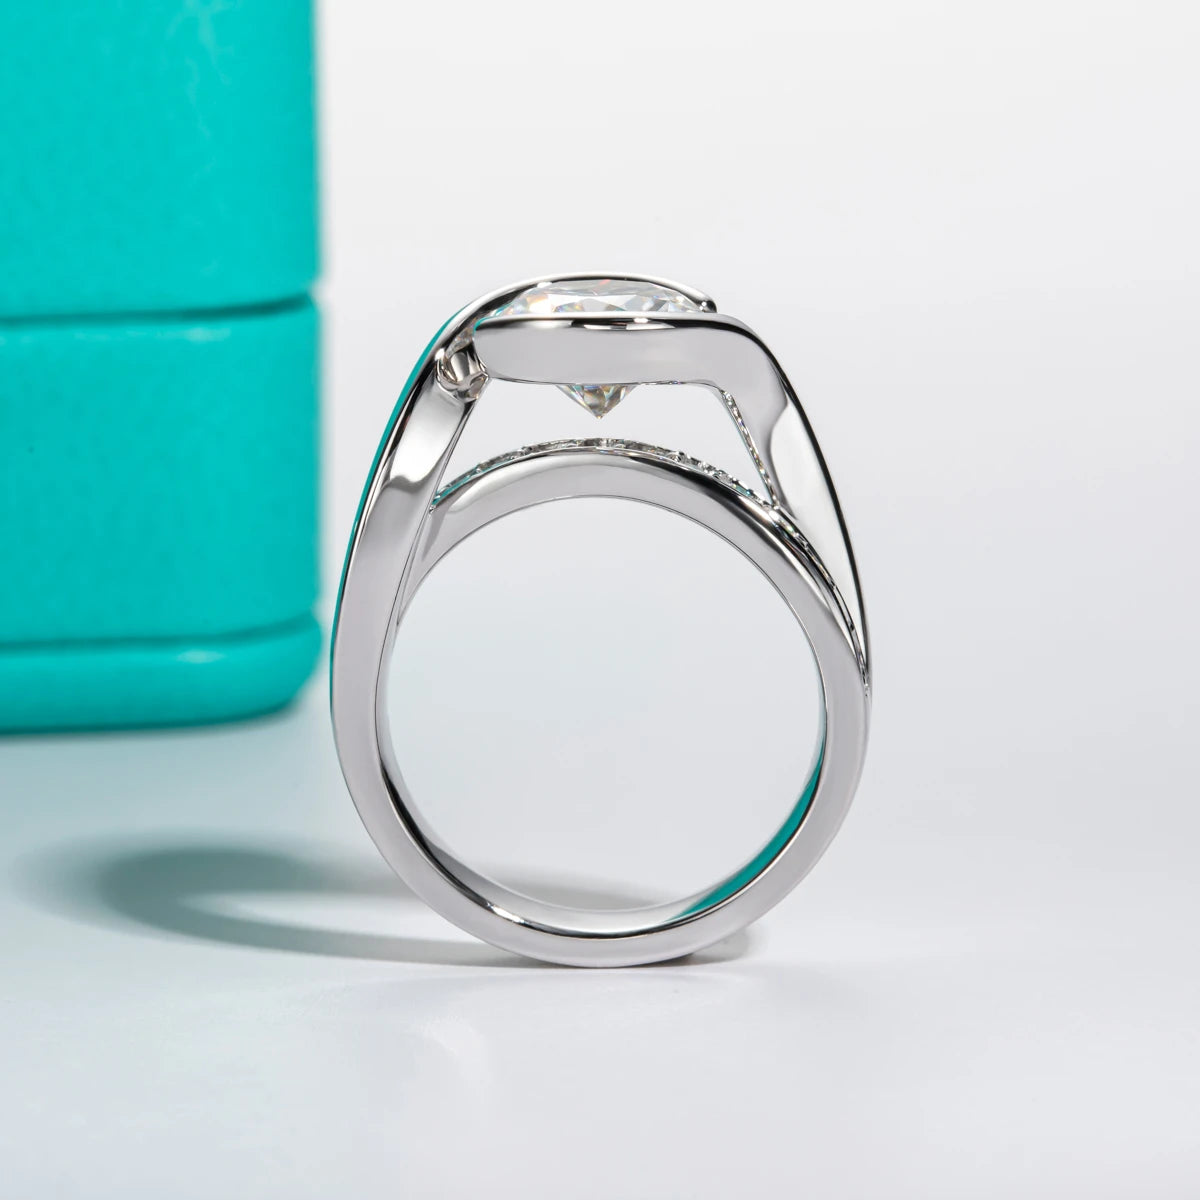 Buy Moissanite Engagement Rings. 3.0 Carat. Round Shape.